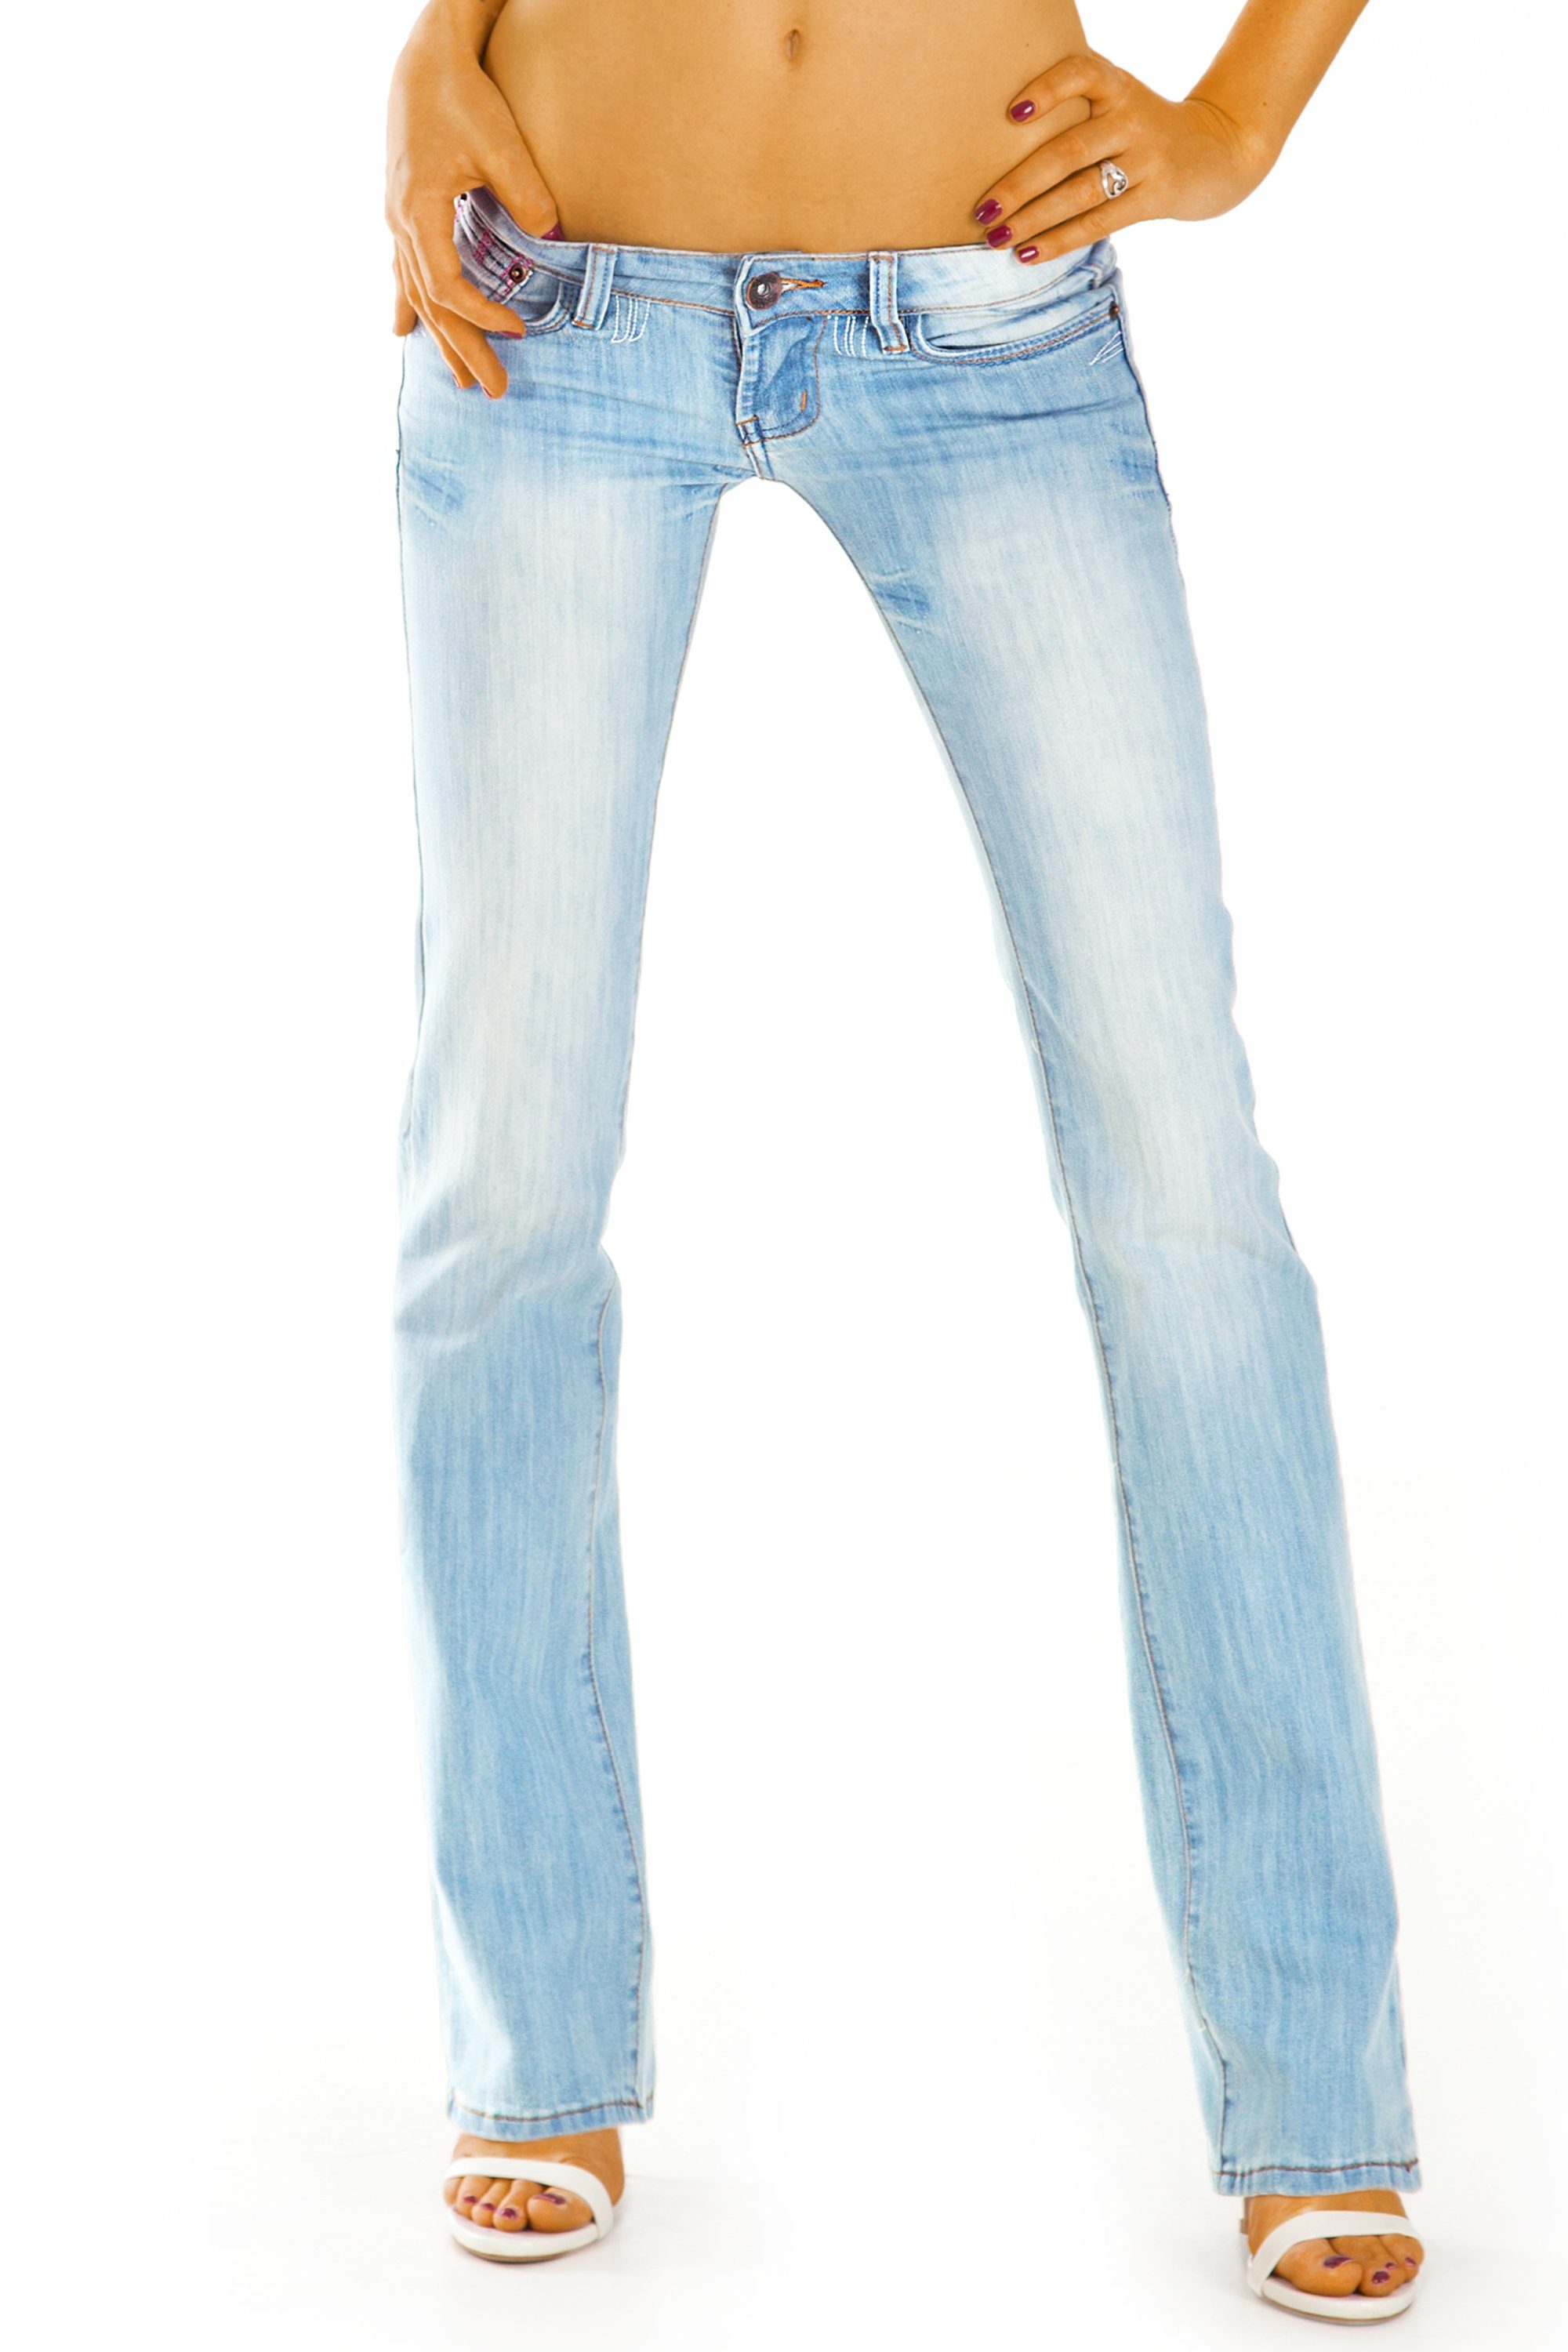 be styled Bootcut-Jeans Damen Hüftjeans extrem tiefer Leibhöhe - Bootcut  Jeanshose - j37a-1 sehr niedrige Leibhöhe, mit Stretch-Anteil,  5-pOcket-Style